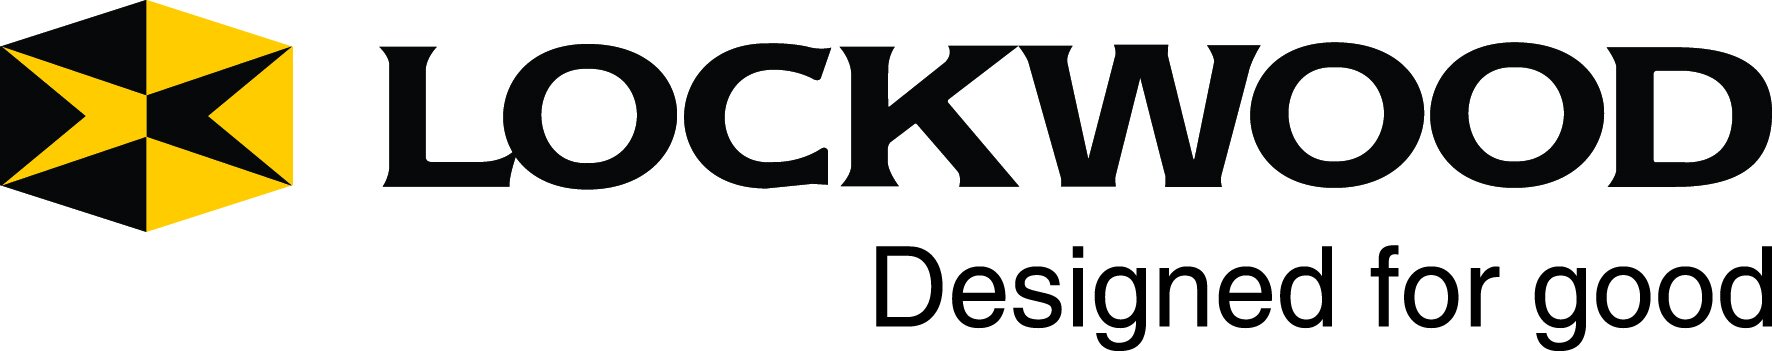 Lockwood_Logo - NEW.jpg